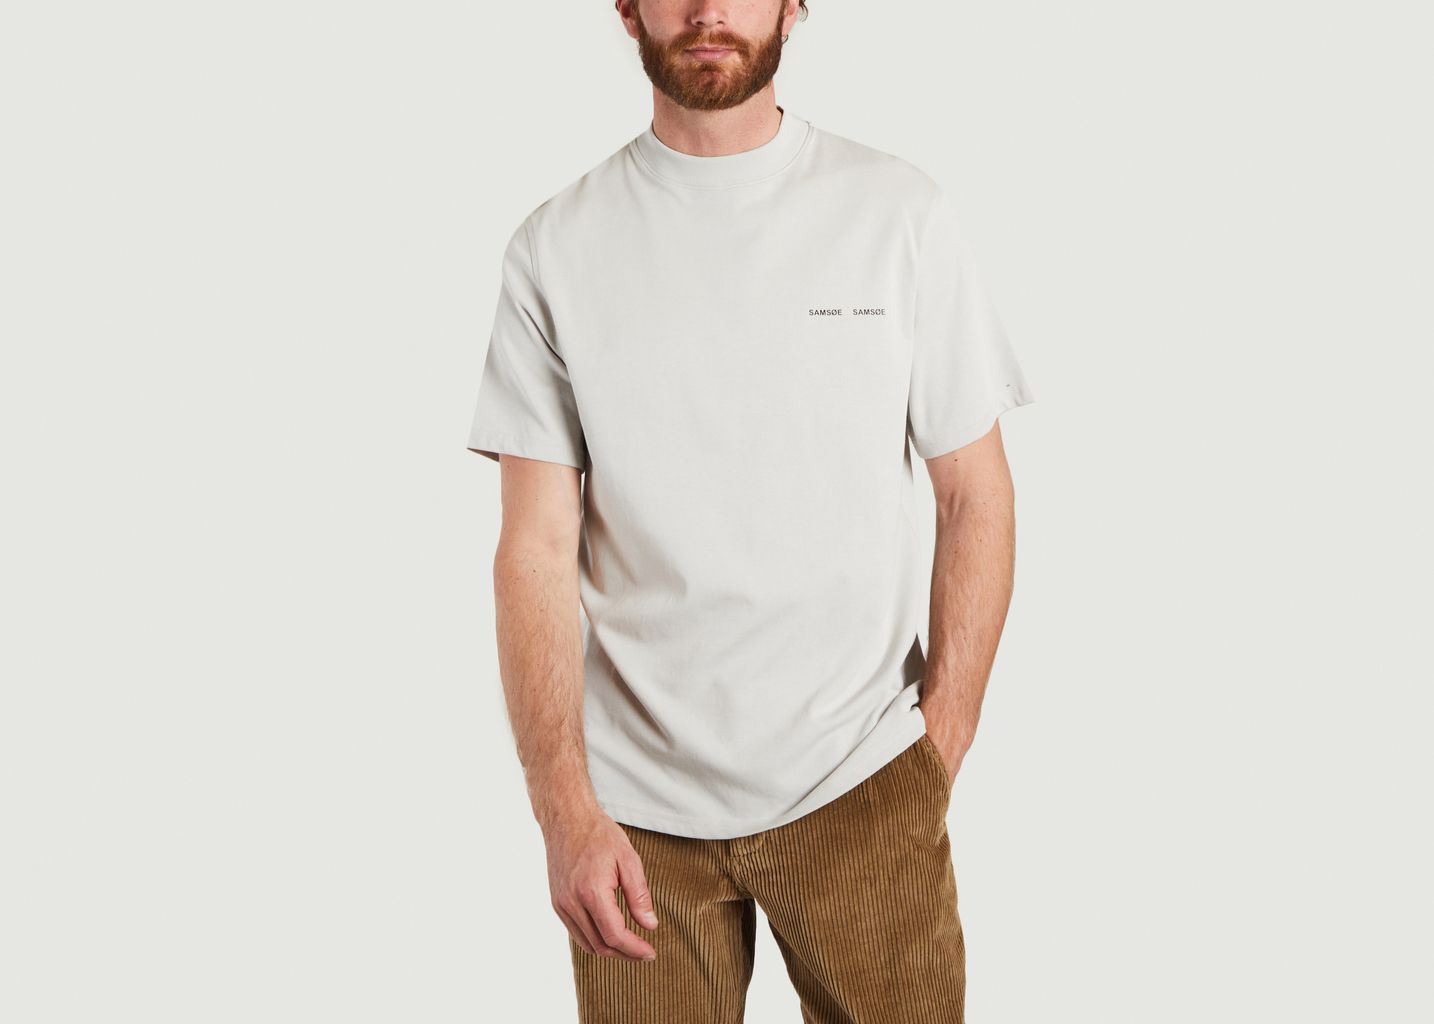 T-shirt Norsbro 6024 en coton biologique